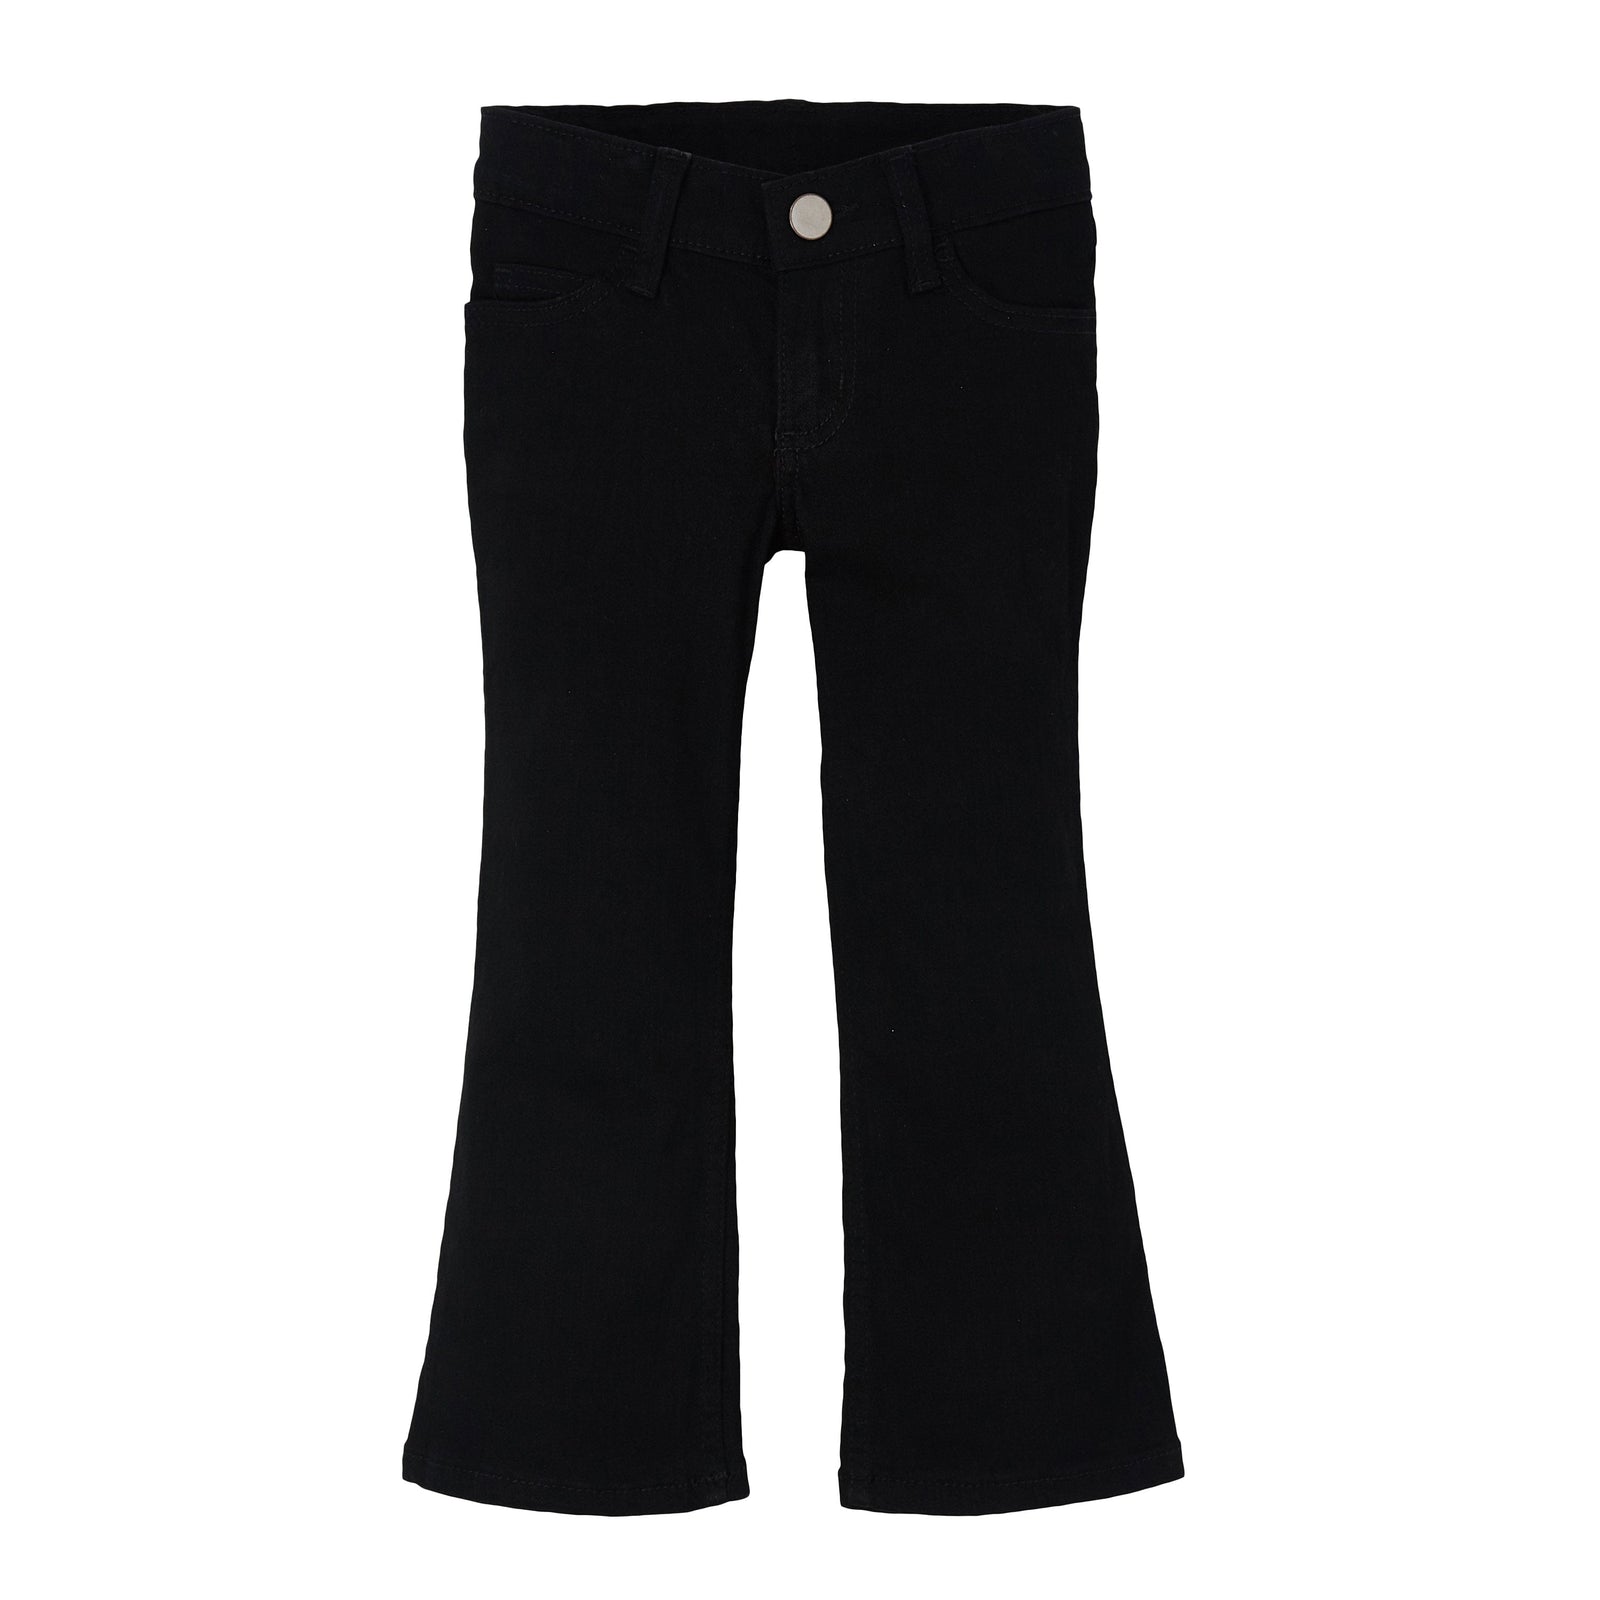 Wrangler Men's Premium Performance Prewashed Slim Fit Jeans 36MWZPD -  Russell's Western Wear, Inc.